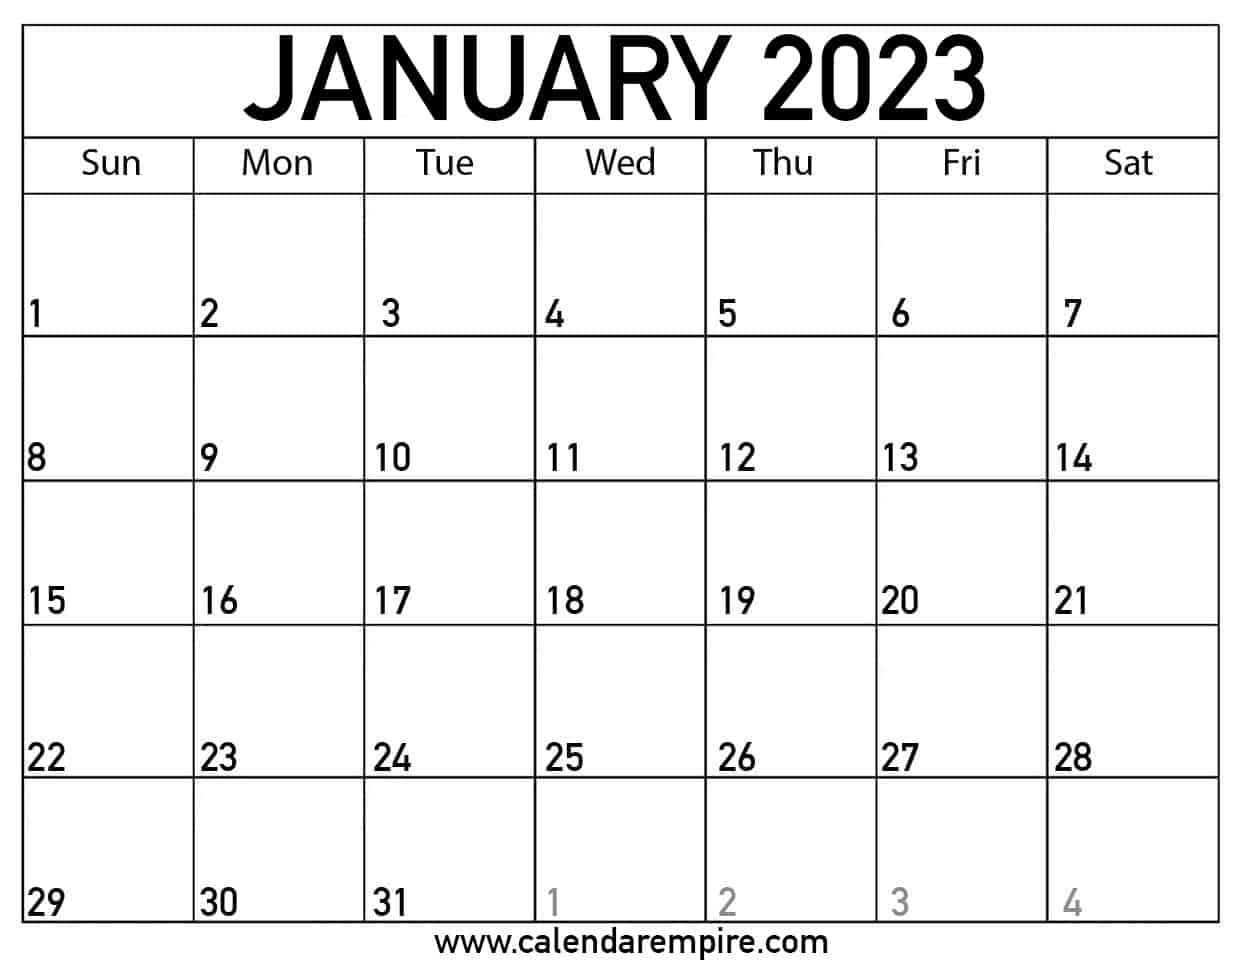 January 2023 Calendar Free